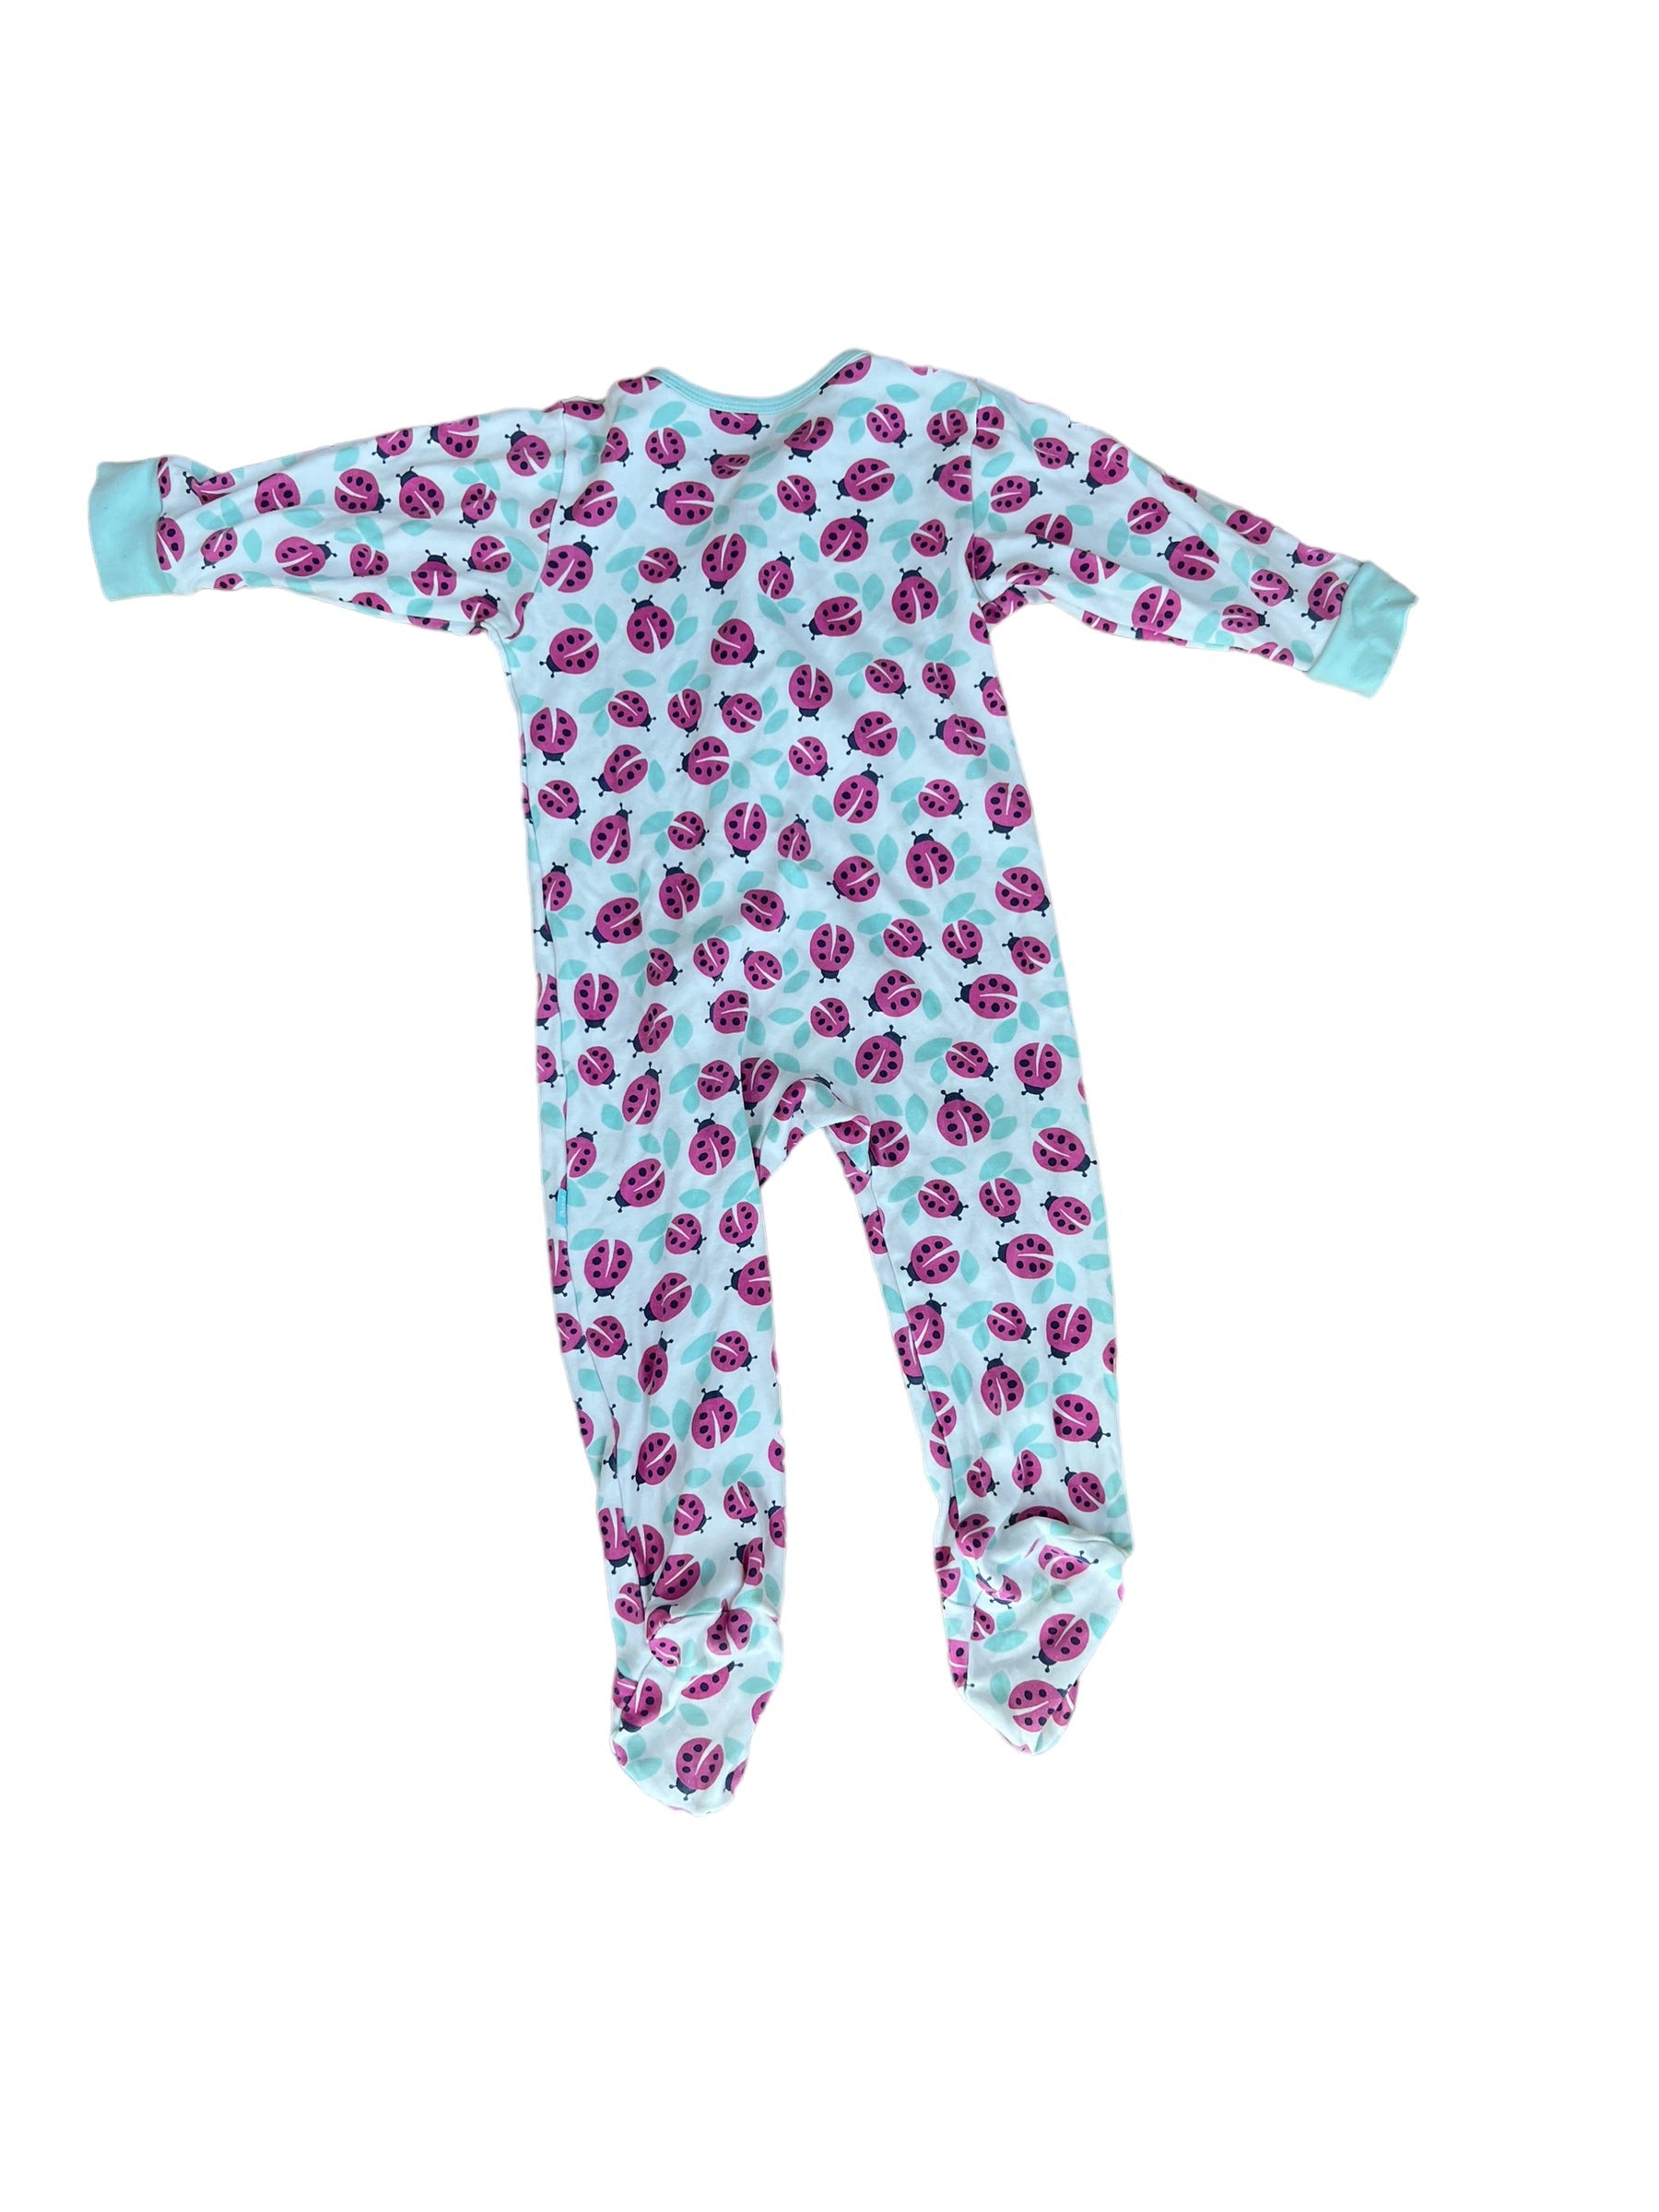 Kite Baby Sleepsuit